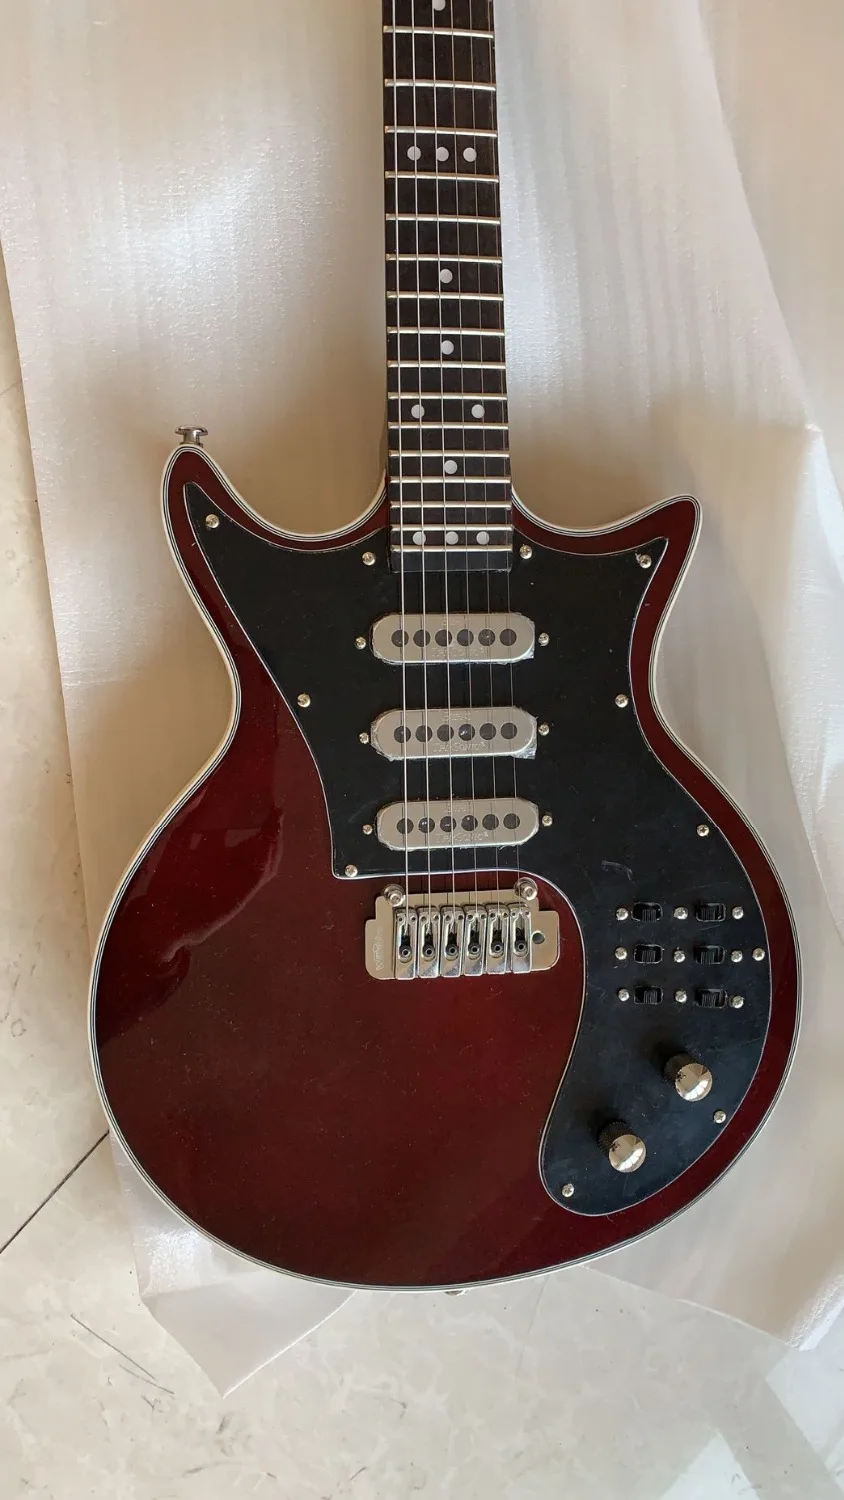 Guild BM01 Brian May Красная гитара 24 лада черная накладка 3 звукоснимателя тремоло мост Китай Гитара s